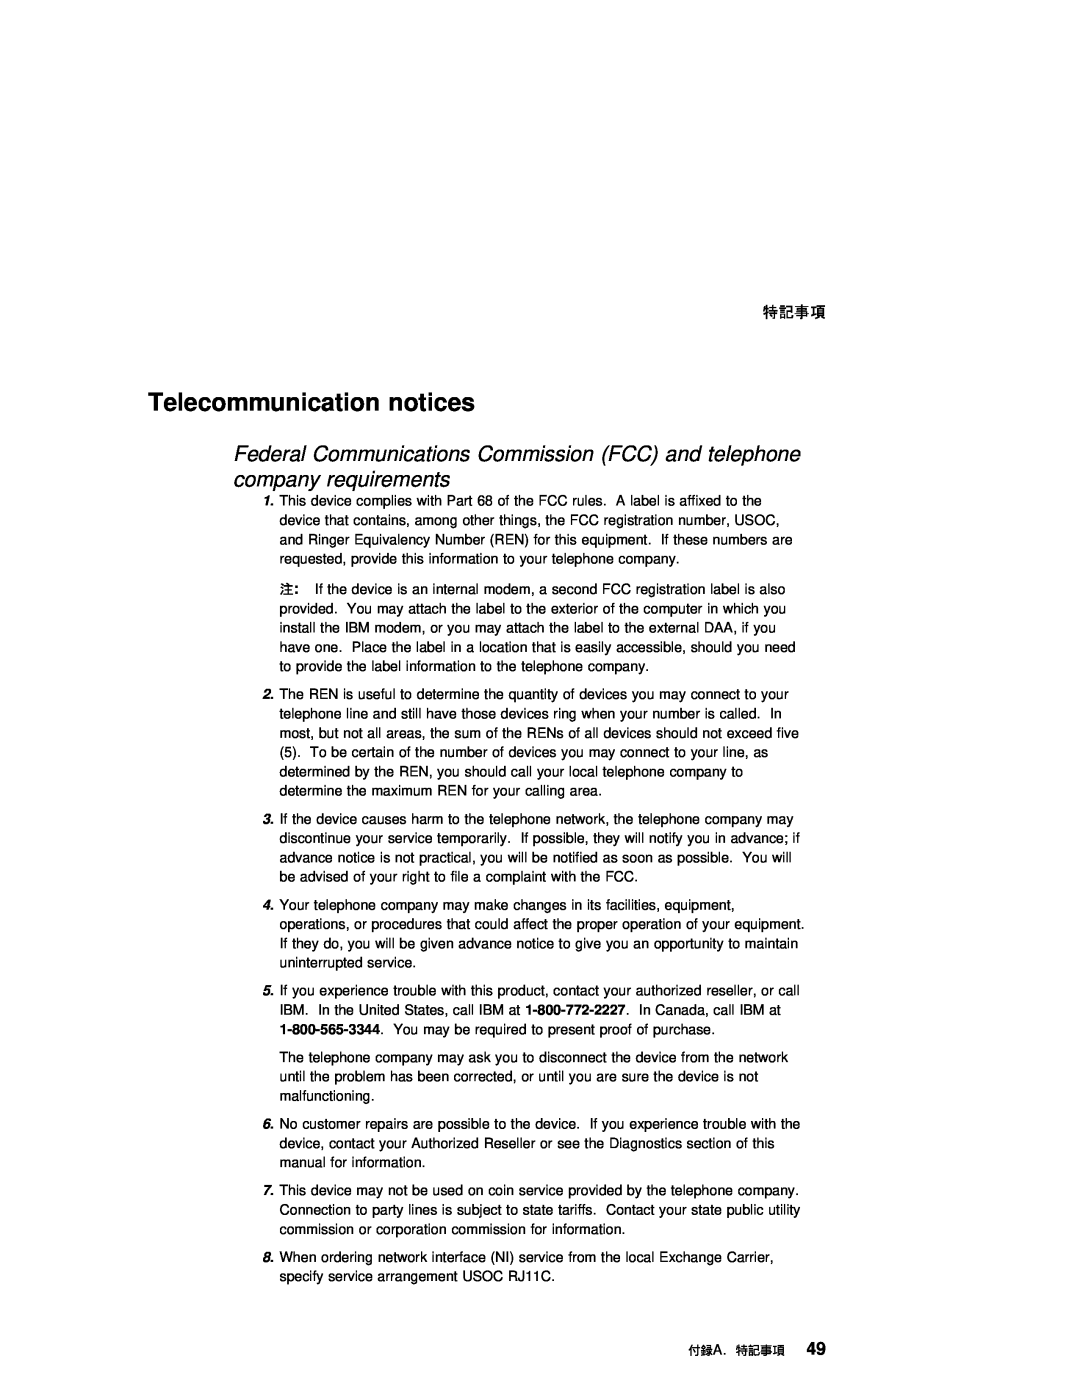 IBM T20 manual Telecommunication notices 